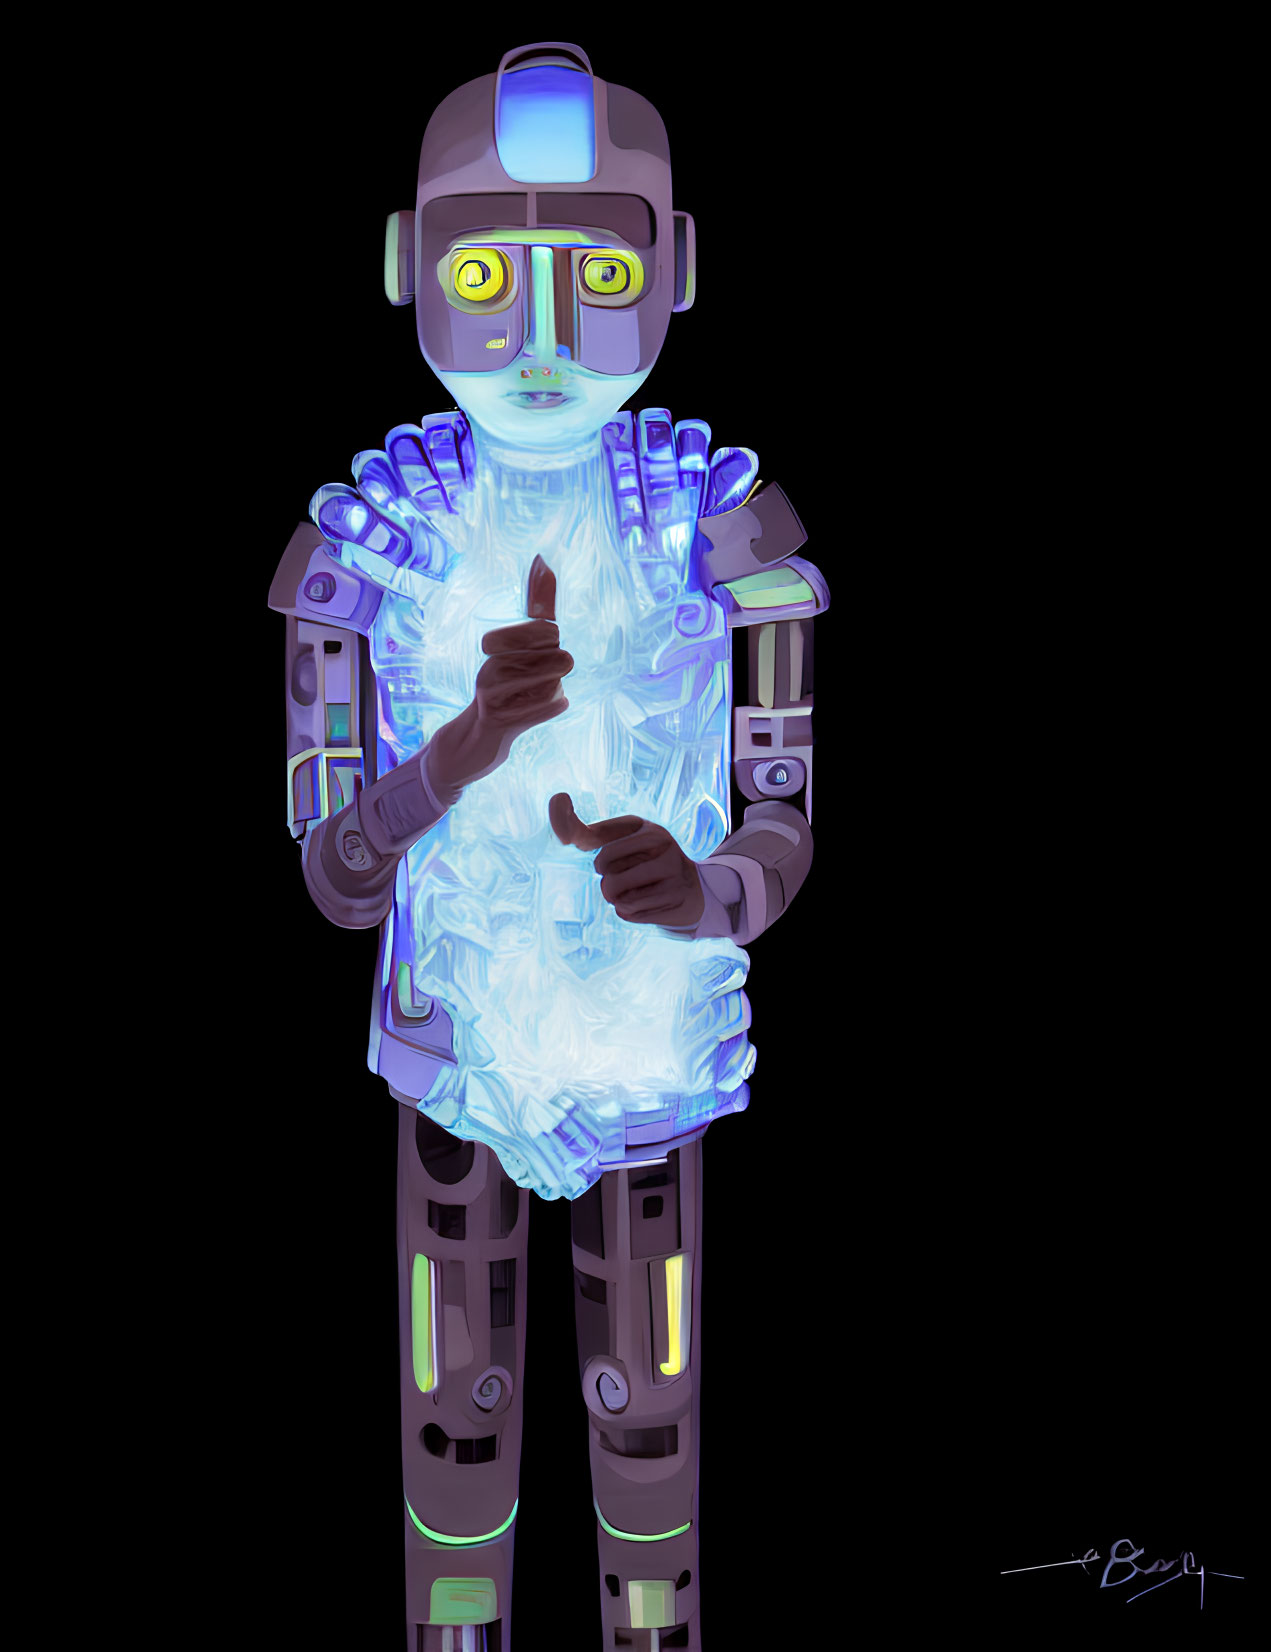 Futuristic robot digital illustration with transparent torso and neon blue highlights